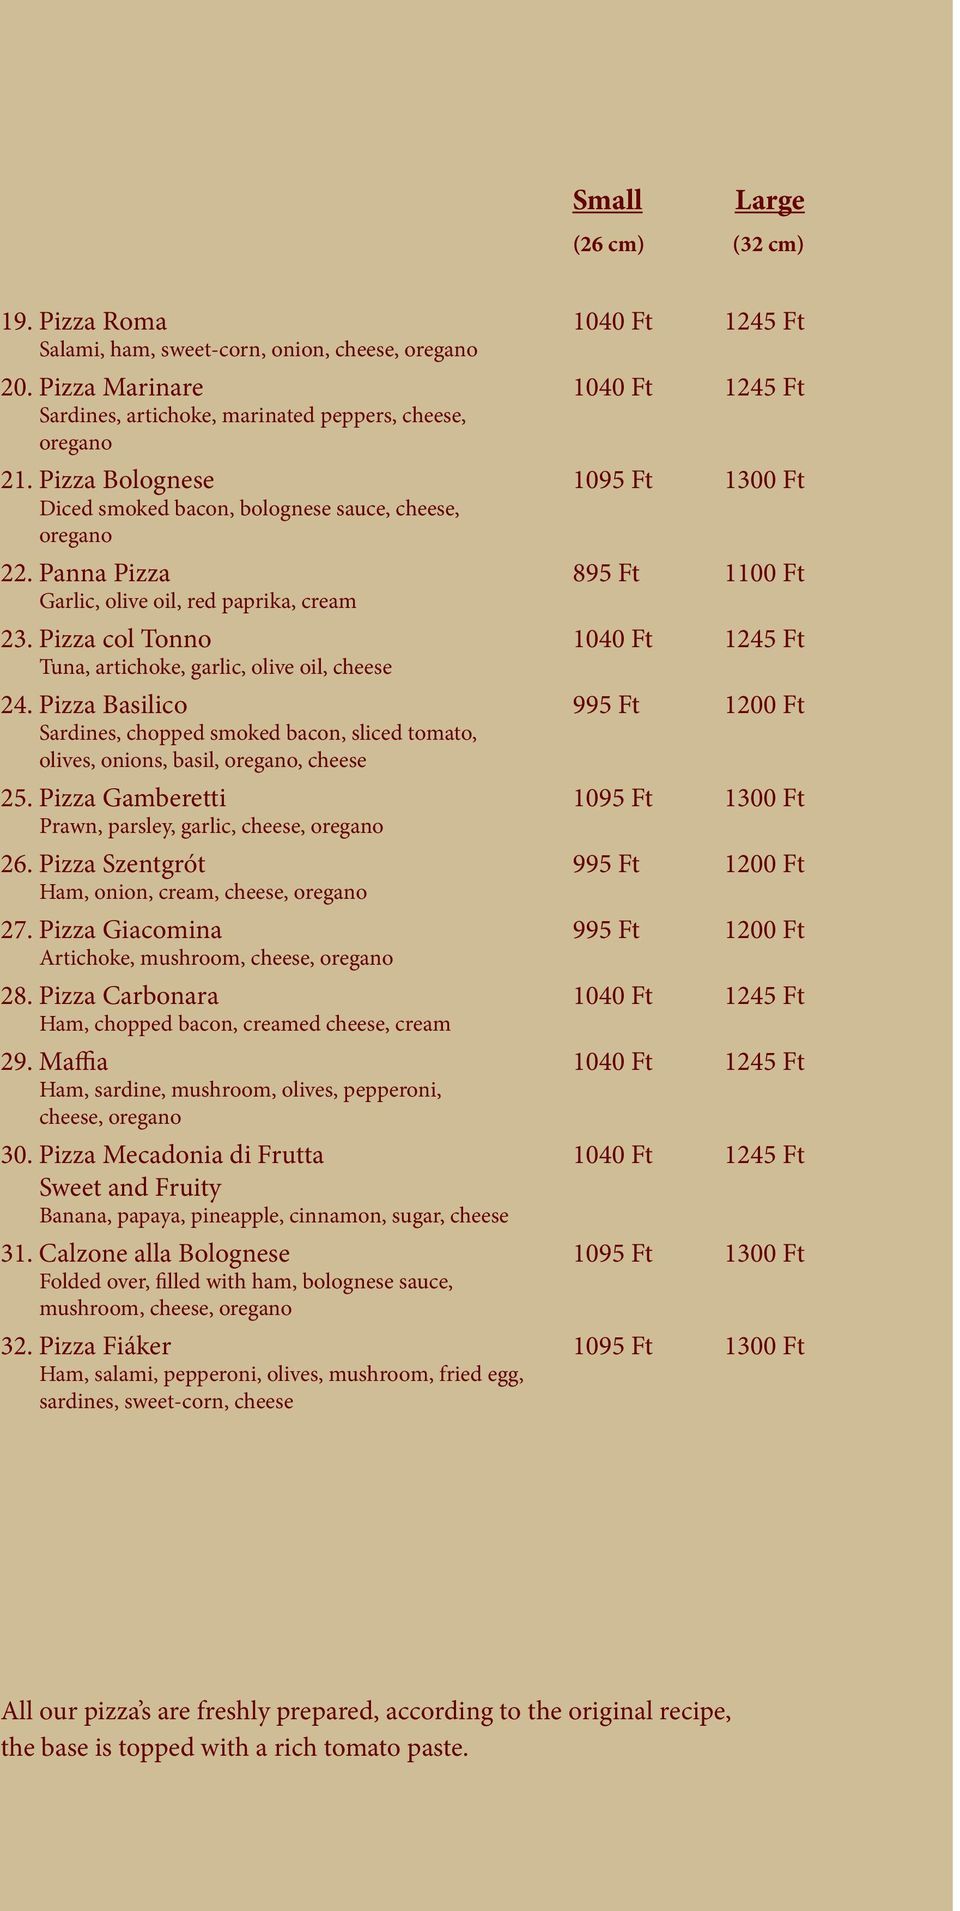 Panna Pizza 895 Ft 1100 Ft Garlic, olive oil, red paprika, cream 23. Pizza col Tonno 1040 Ft 1245 Ft Tuna, artichoke, garlic, olive oil, cheese 24.